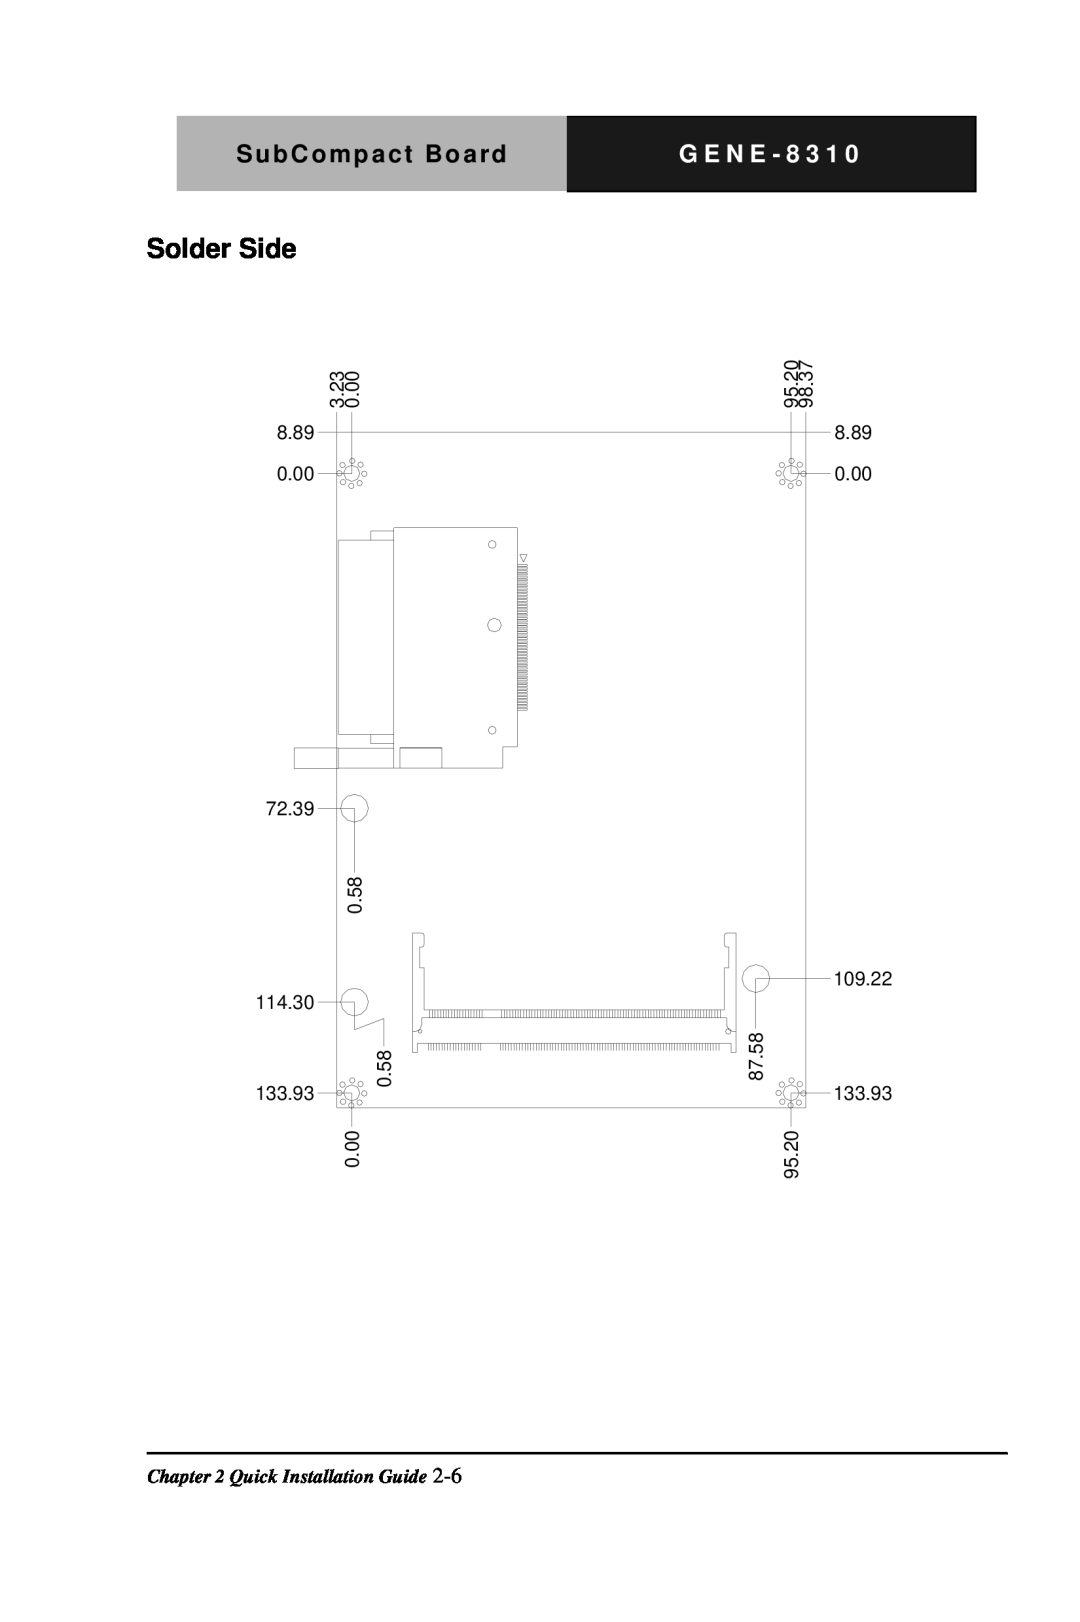 Intel GENE-8310 manual Solder Side, SubCompact Board, G E N E - 8 3 1, 3.23 8.89 0.00 72.39 0.58 114.30, 133.93 